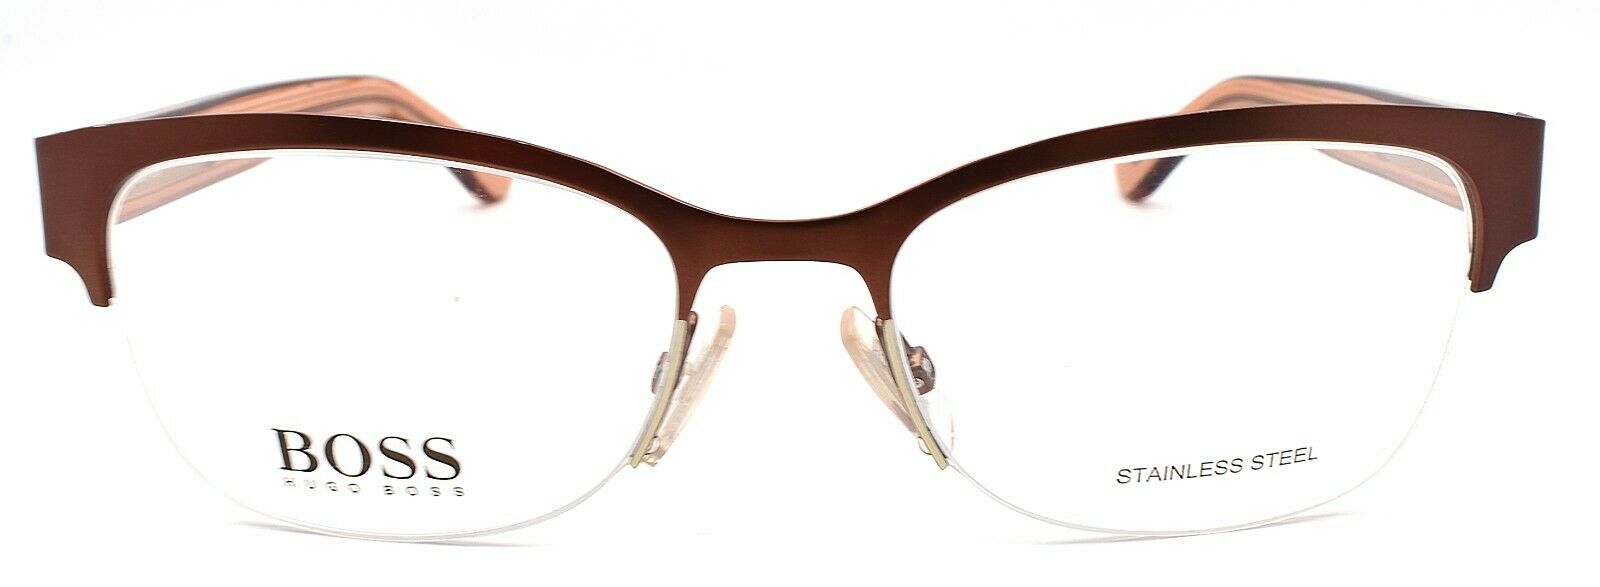 2-BOSS by Hugo Boss 0718 IIT Women's Eyeglasses Frames 51-17-140 Red Brown / Pink-762753651037-IKSpecs